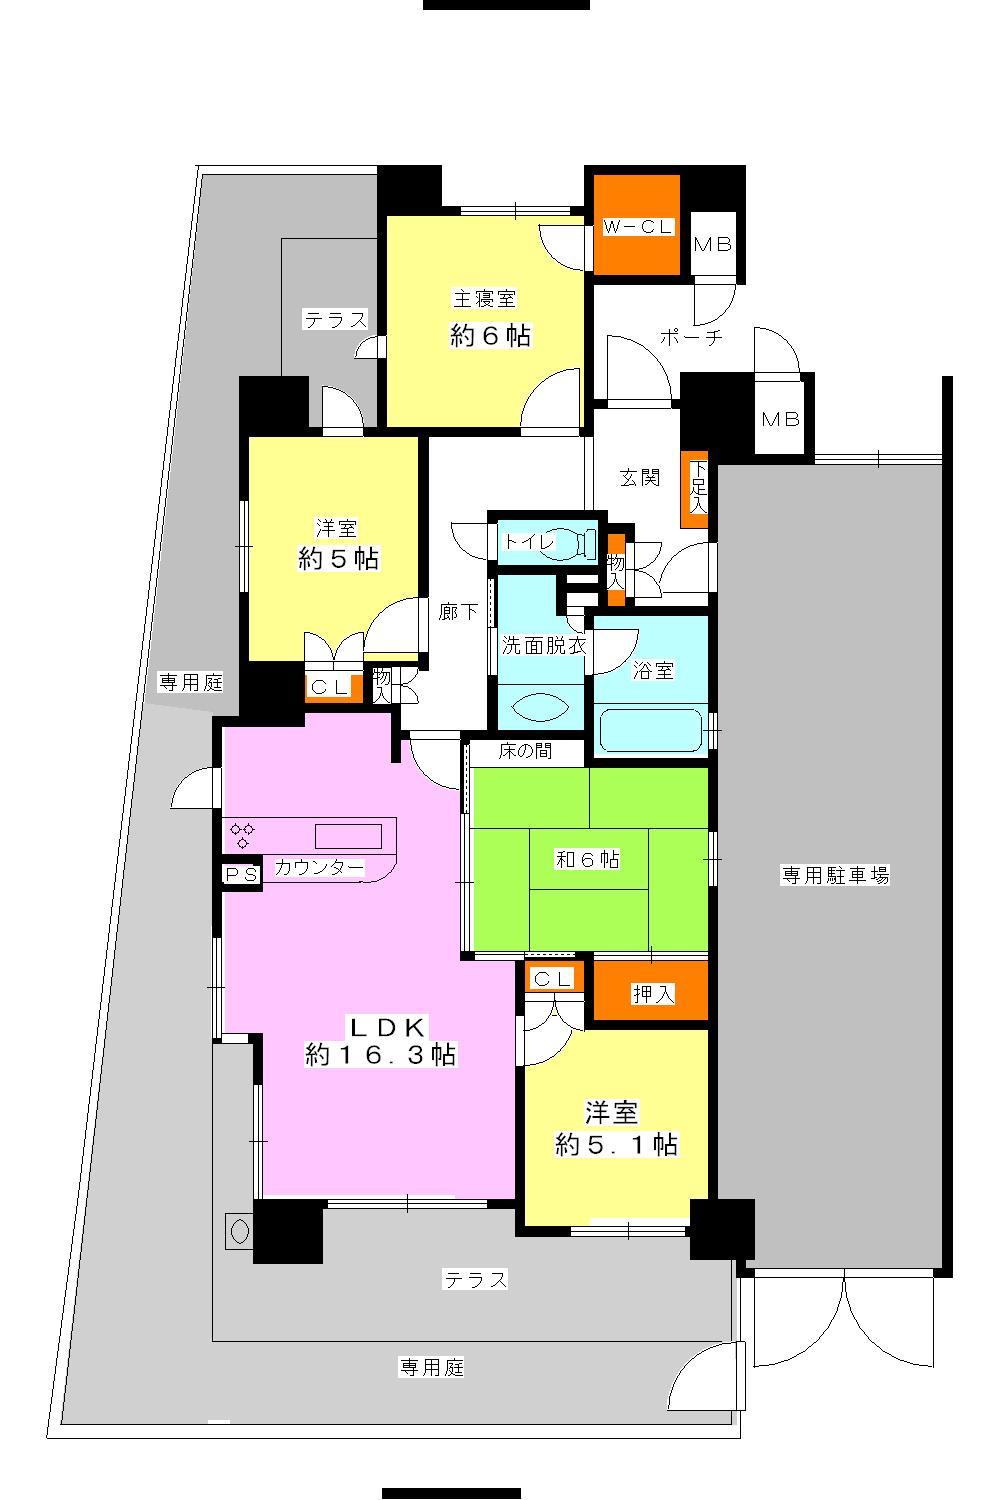 Floor plan. 4LDK, Price 28 million yen, The area occupied 125.4 sq m